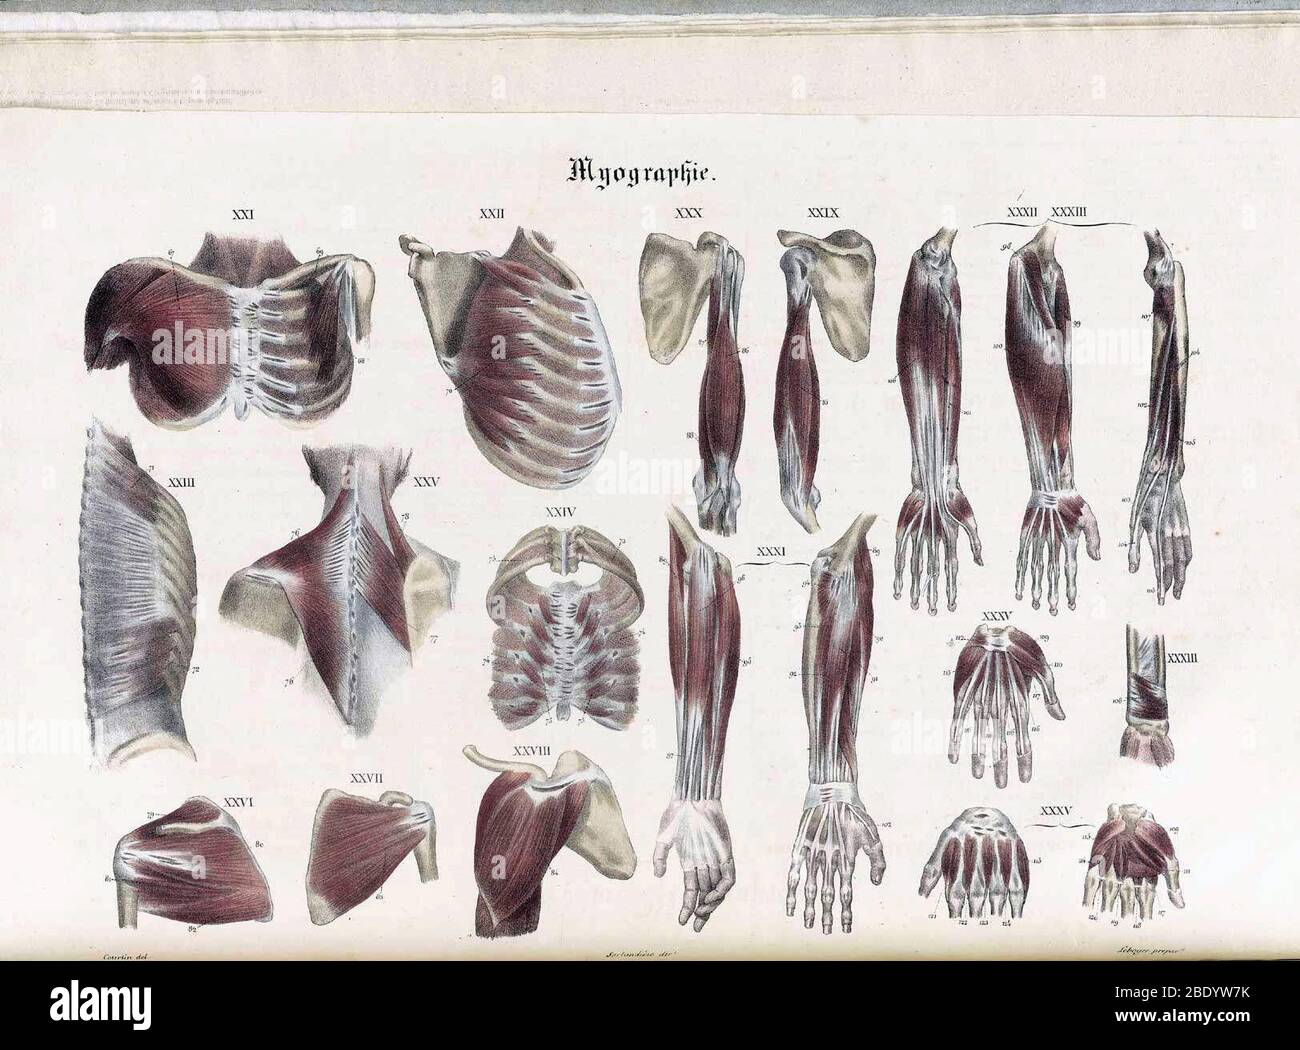 Anatomie Methodique Illustrationen Stockfoto